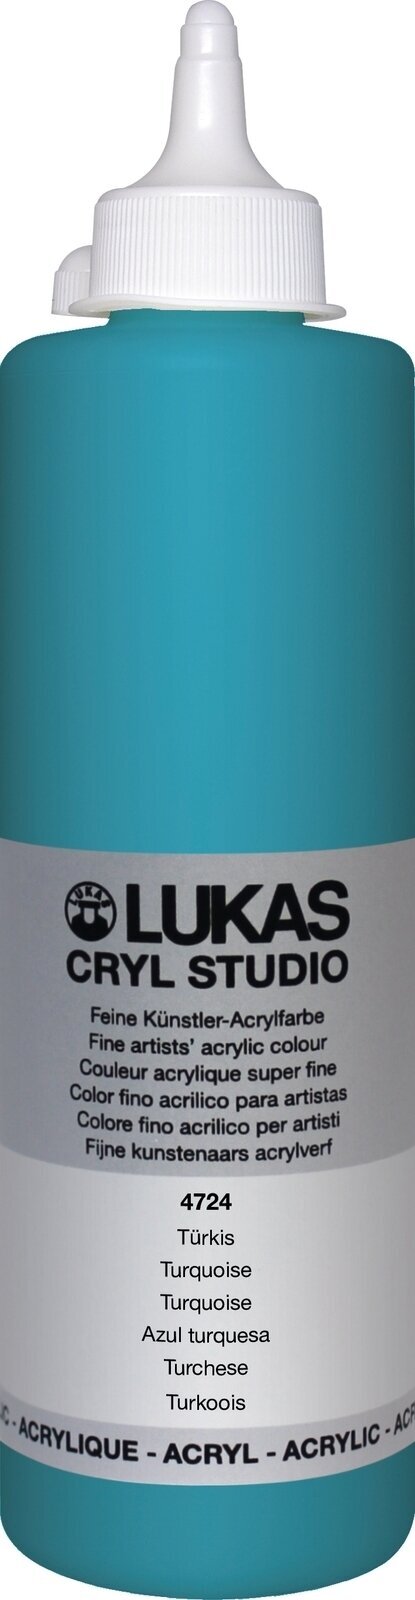 Acrylfarbe Lukas Cryl Studio Acrylic Paint Plastic Bottle Acrylfarbe Turquoise 500 ml 1 Stck